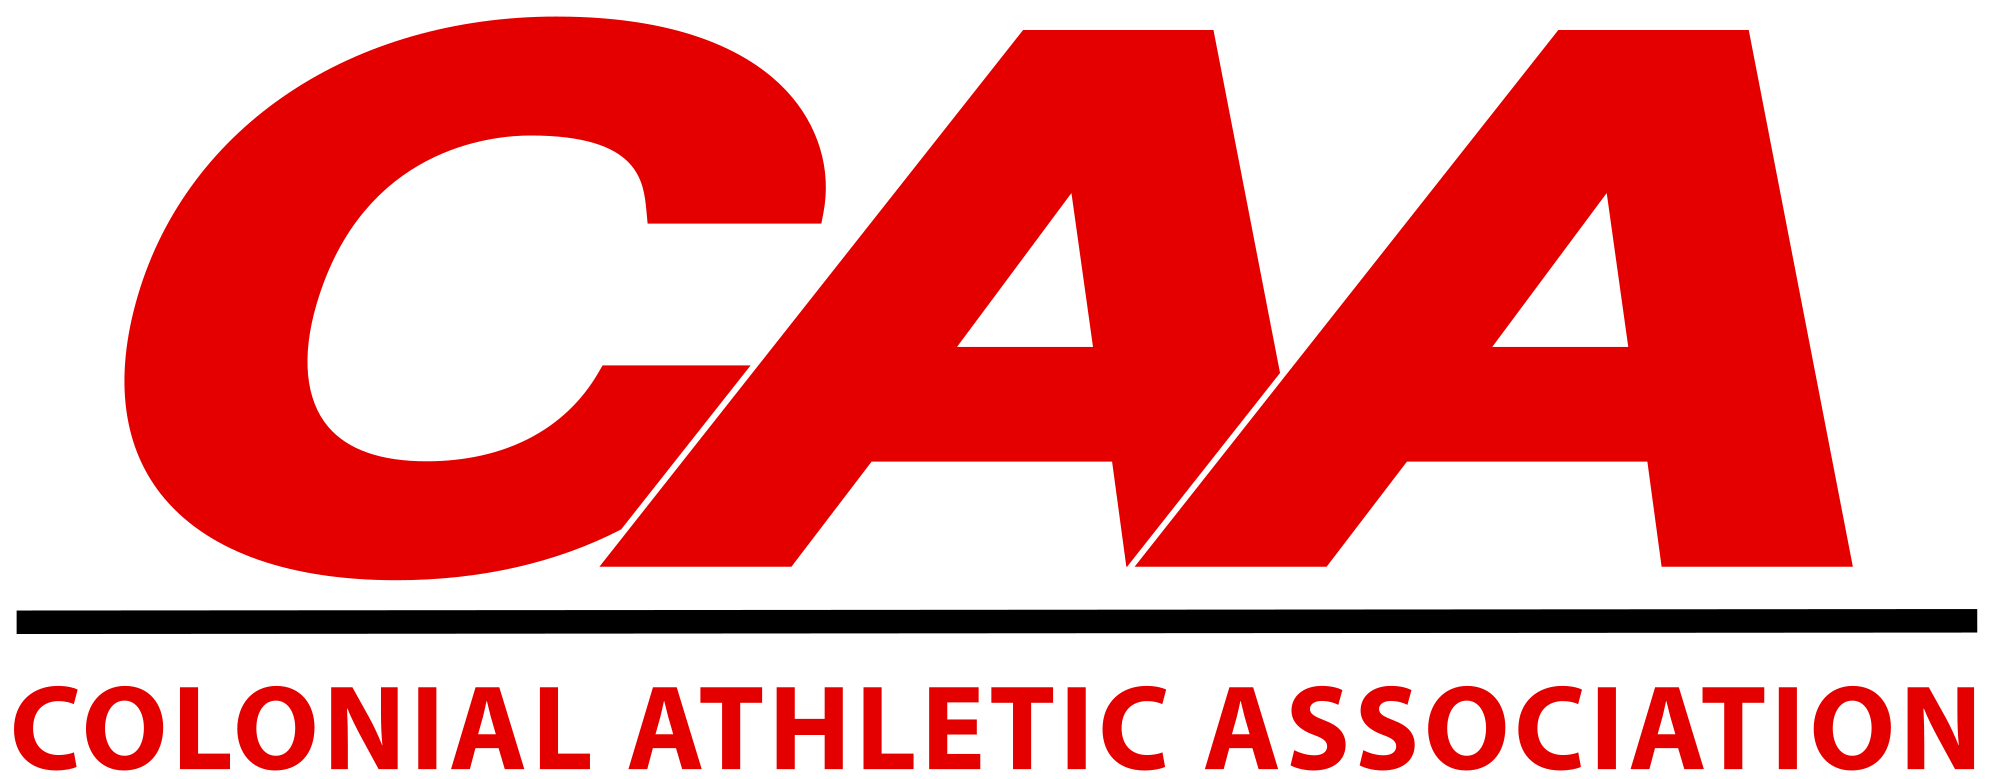 CAA Logo - CAA logo in Northeastern colors.svg